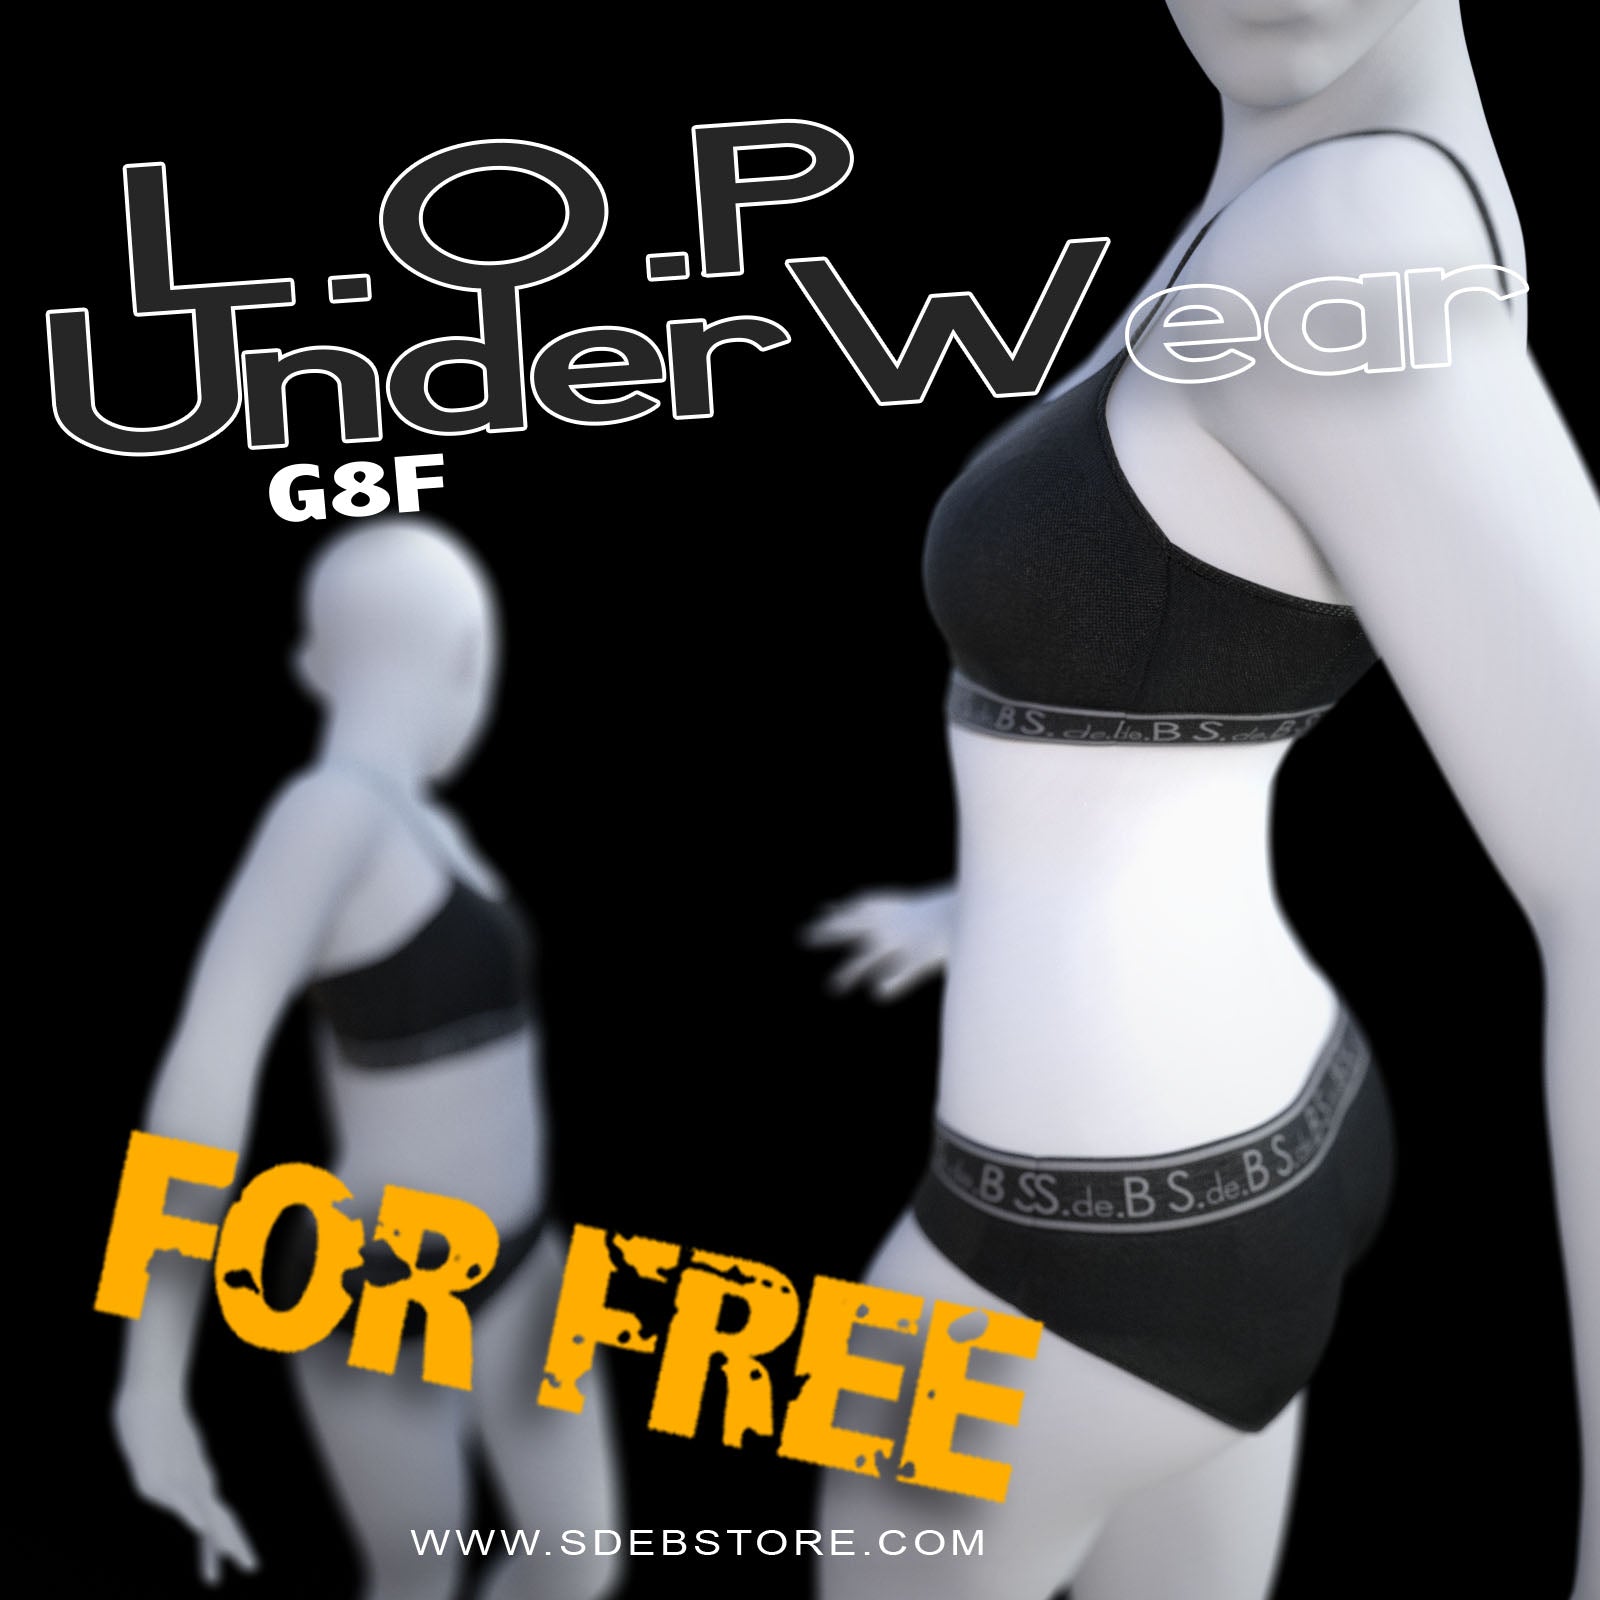 L.O.P Underwear G8F-FREE